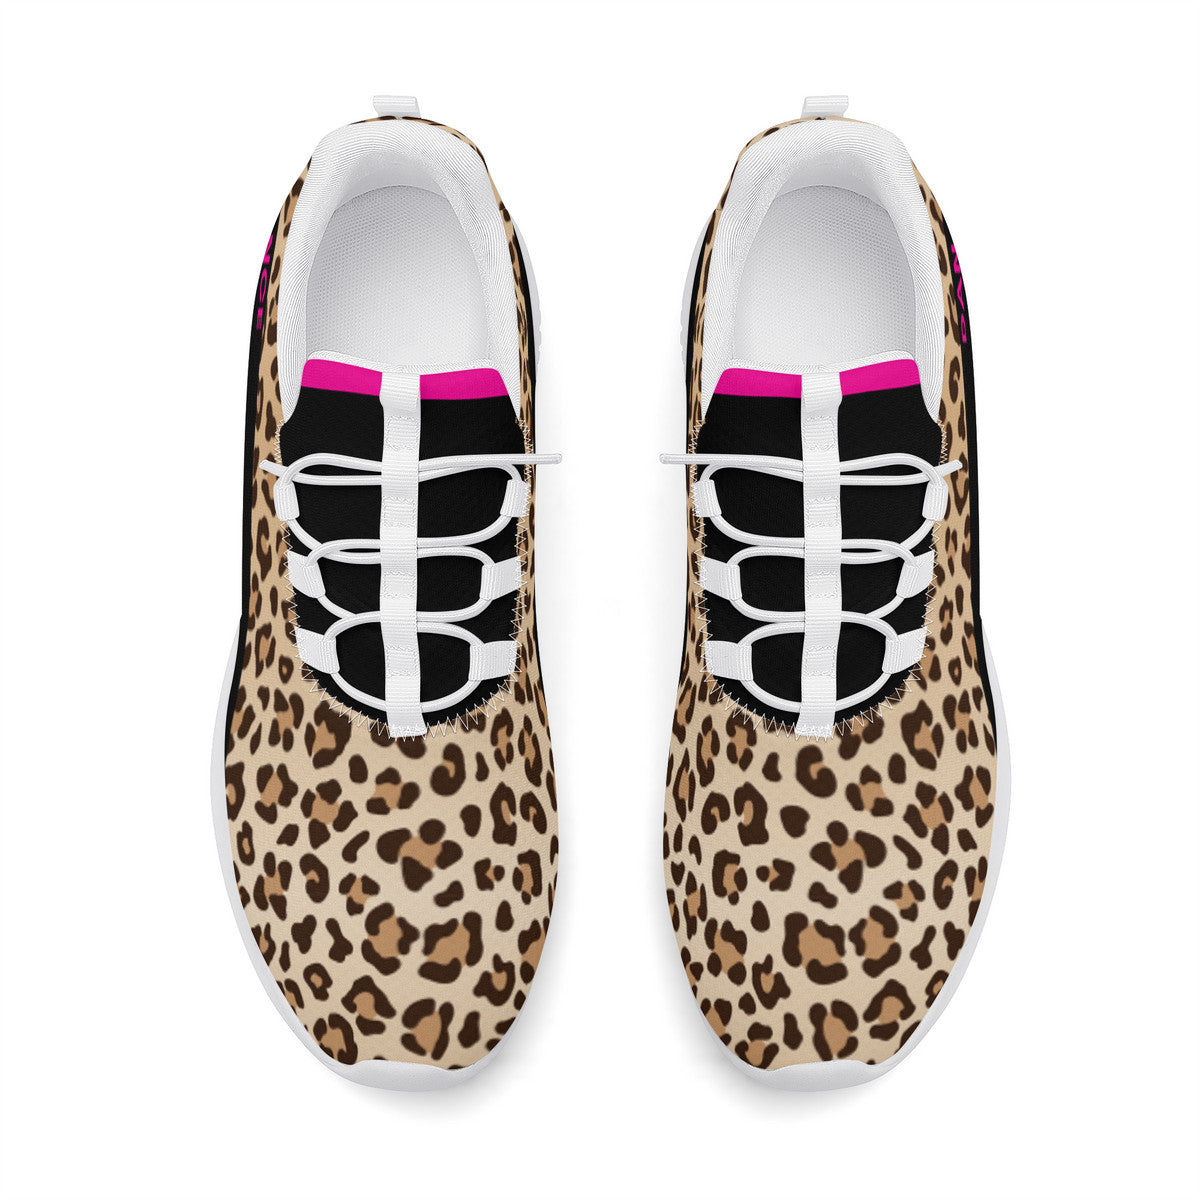 Dance Sneakers - Leopard Print Dance Shoes